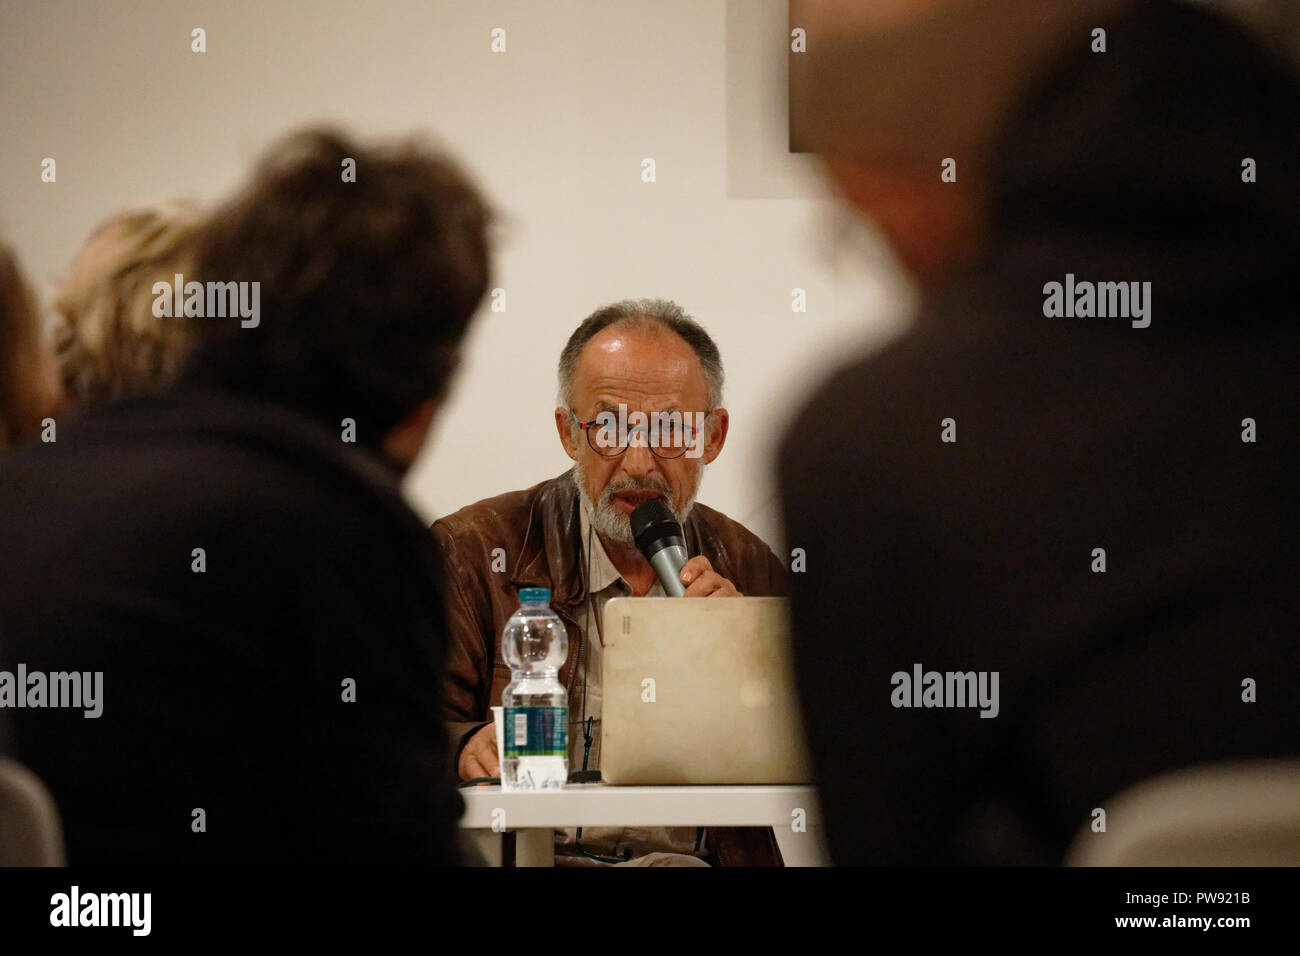 Turin, Italie. 13 octobre, 2018. Manoocher Deghati donne une conférence publique à l'exposition World Press Photo 2018. MLBARIONA/Alamy Live News Banque D'Images